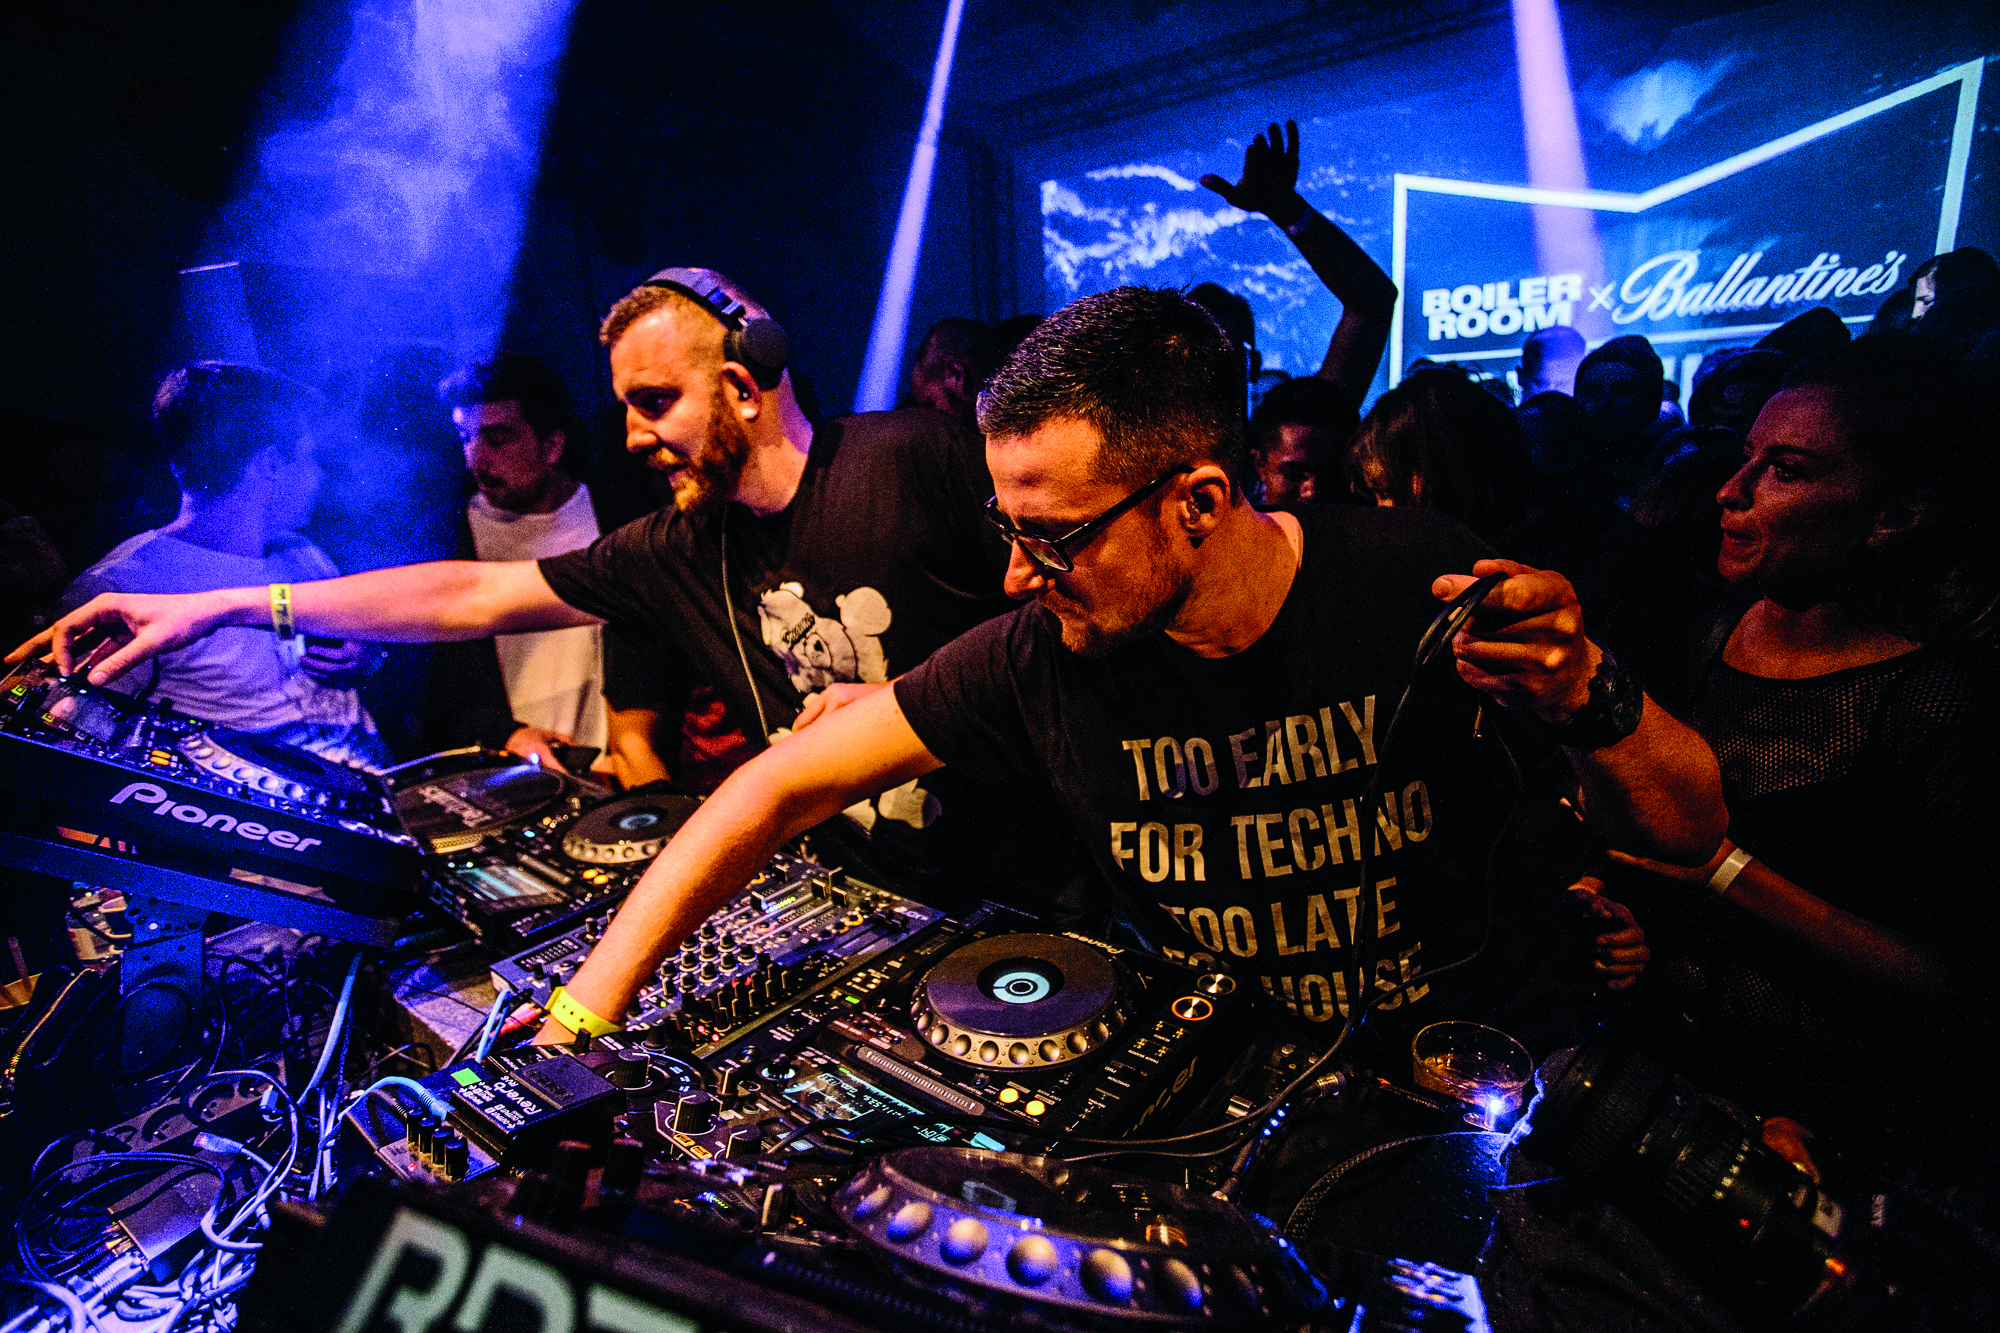 Best Techno Clubs In Warsaw Boiler Room & Ballantine's Explore Warsaw's Club Scene | DJMag.com